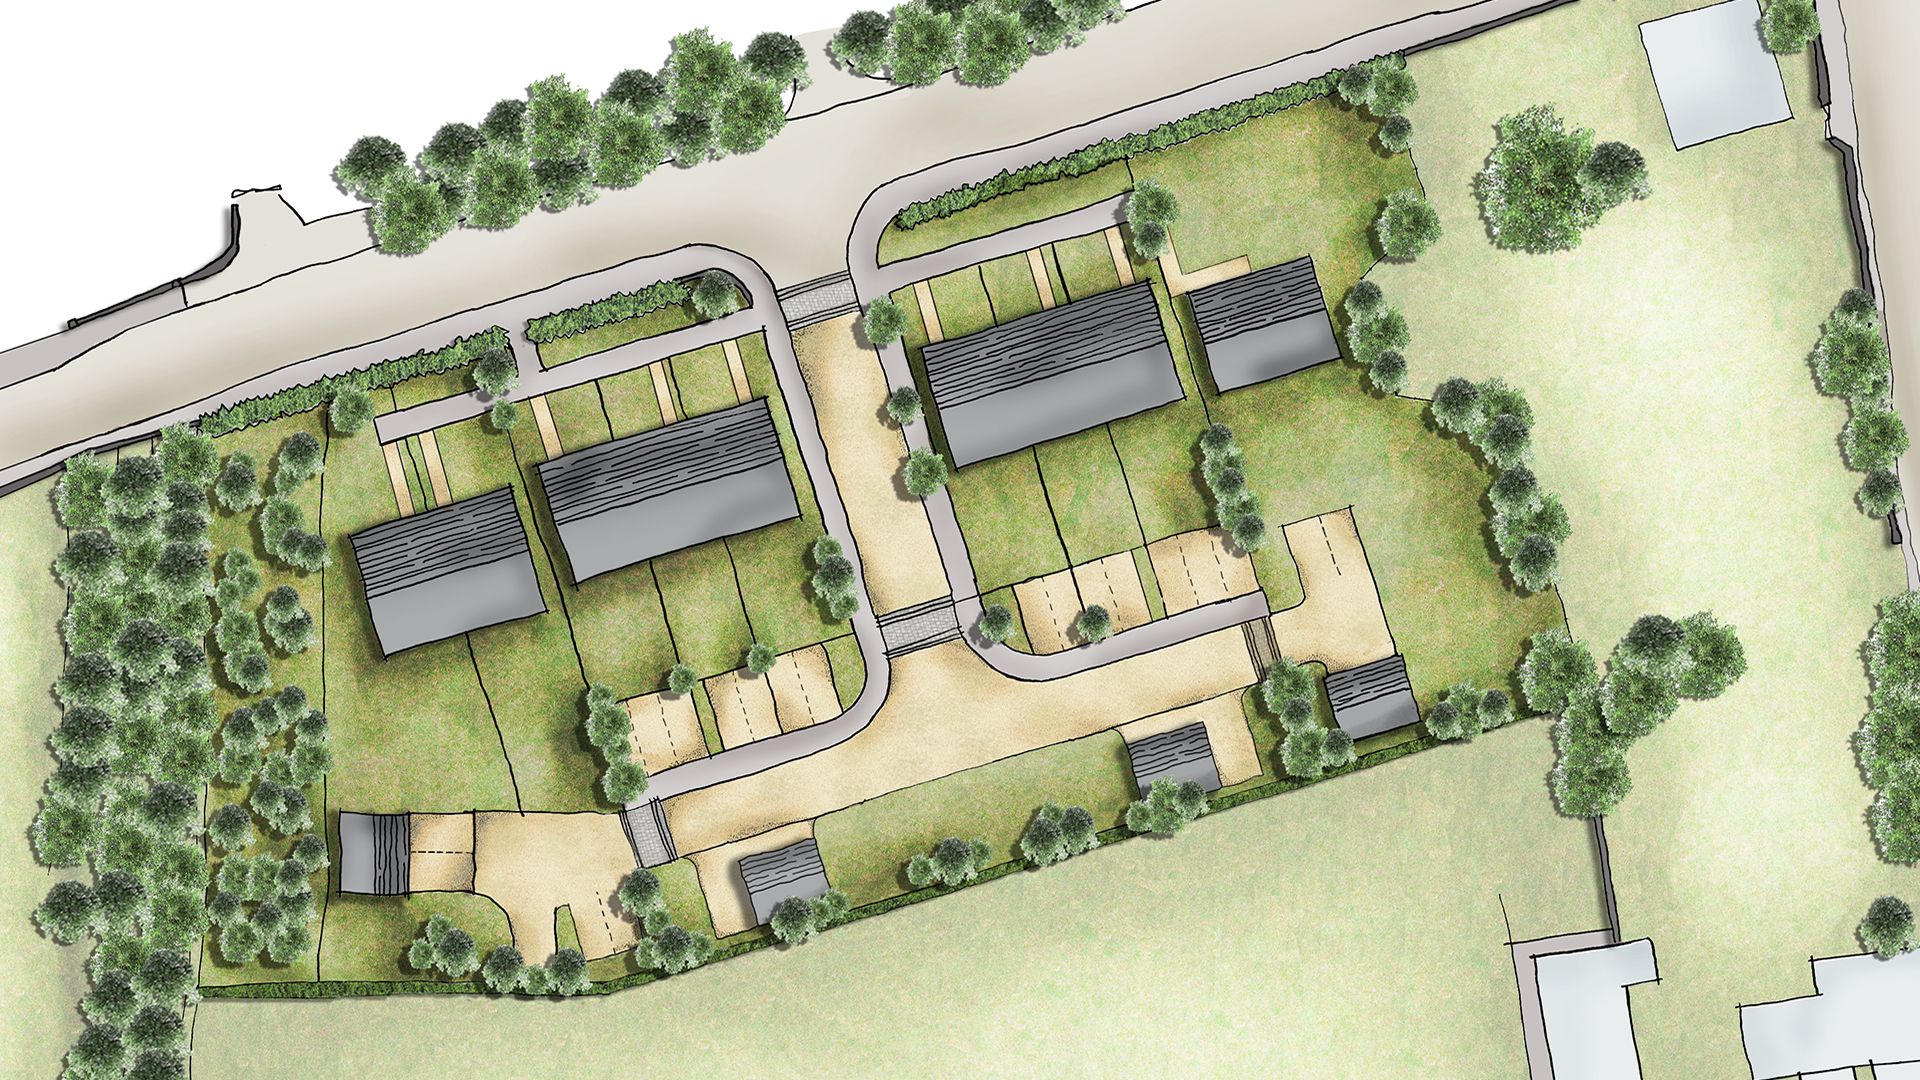 Site Plan for Belsay housing development